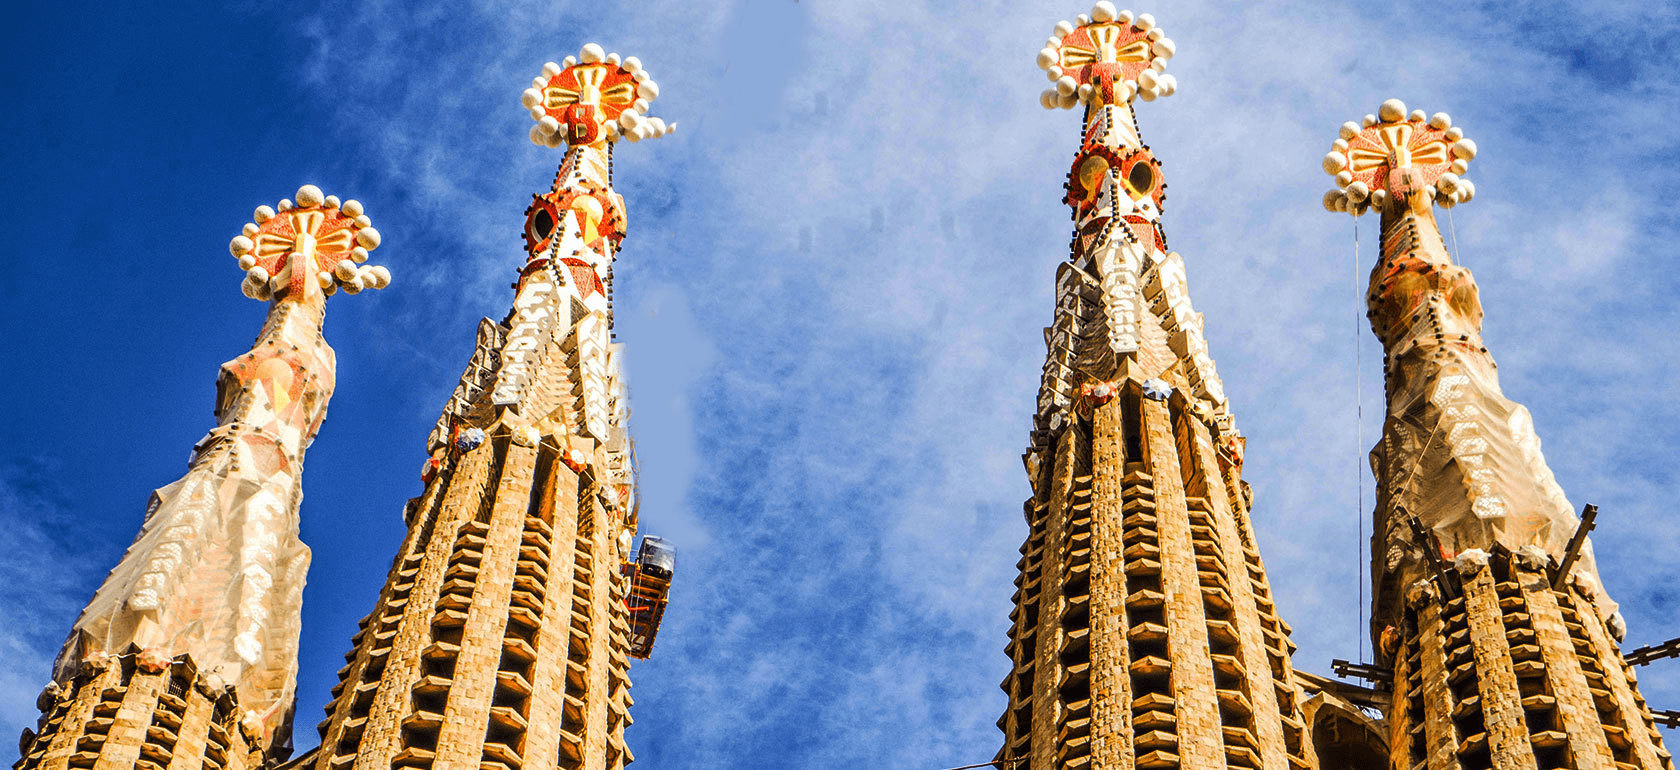 Sagrada Familia by Gaudi - Basilica in Barcelona, Spain - 137 Year Project 17